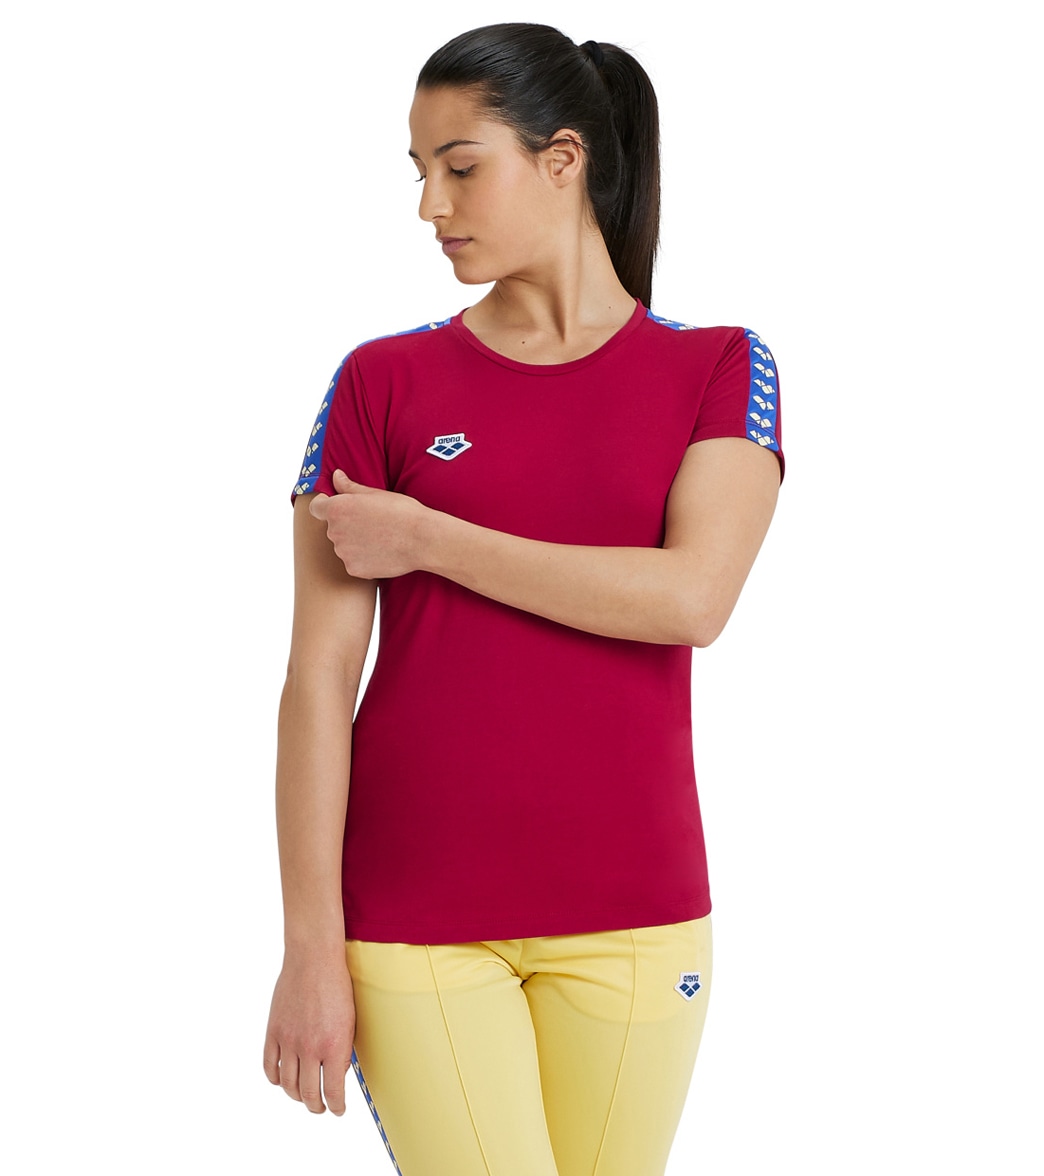 Arena Women's Icons Team Short Sleeve T-Shirt - Burgandy/Neon Blue/Butter Large Cotton - Swimoutlet.com